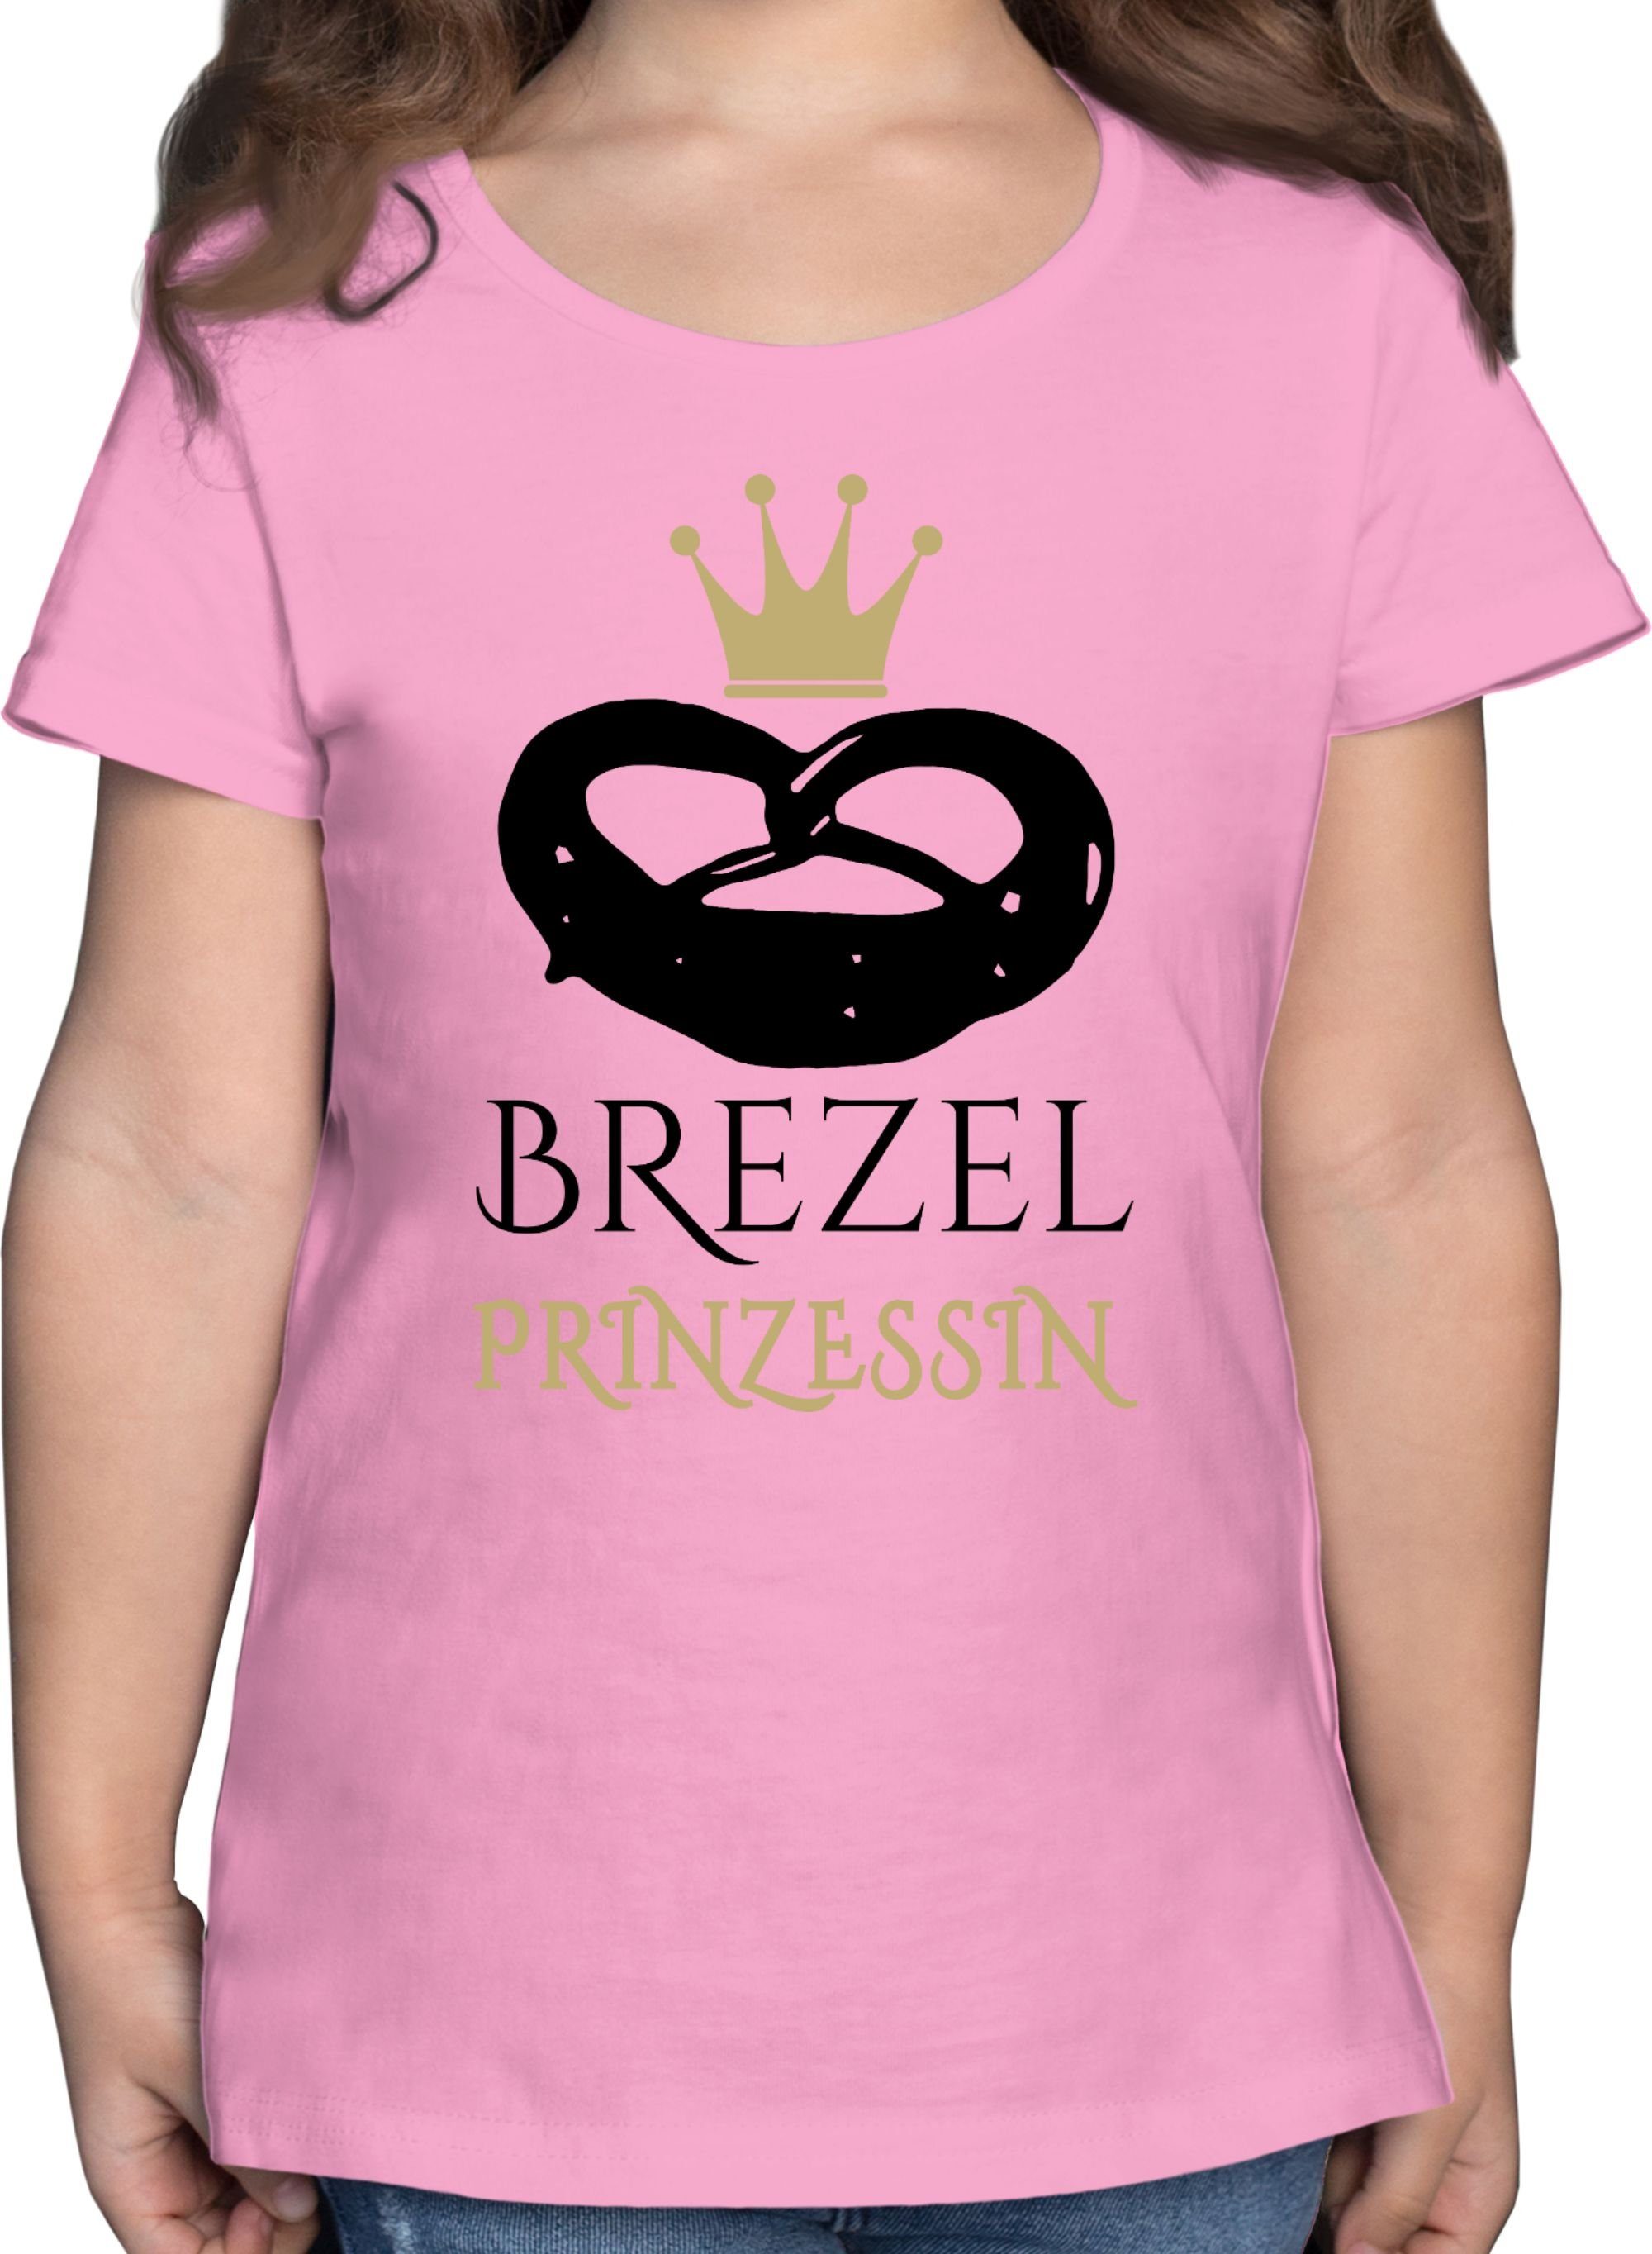 Shirtracer Kinder T-Shirt Outfit Prinzessin Rosa Mode 2 Brezel für Oktoberfest